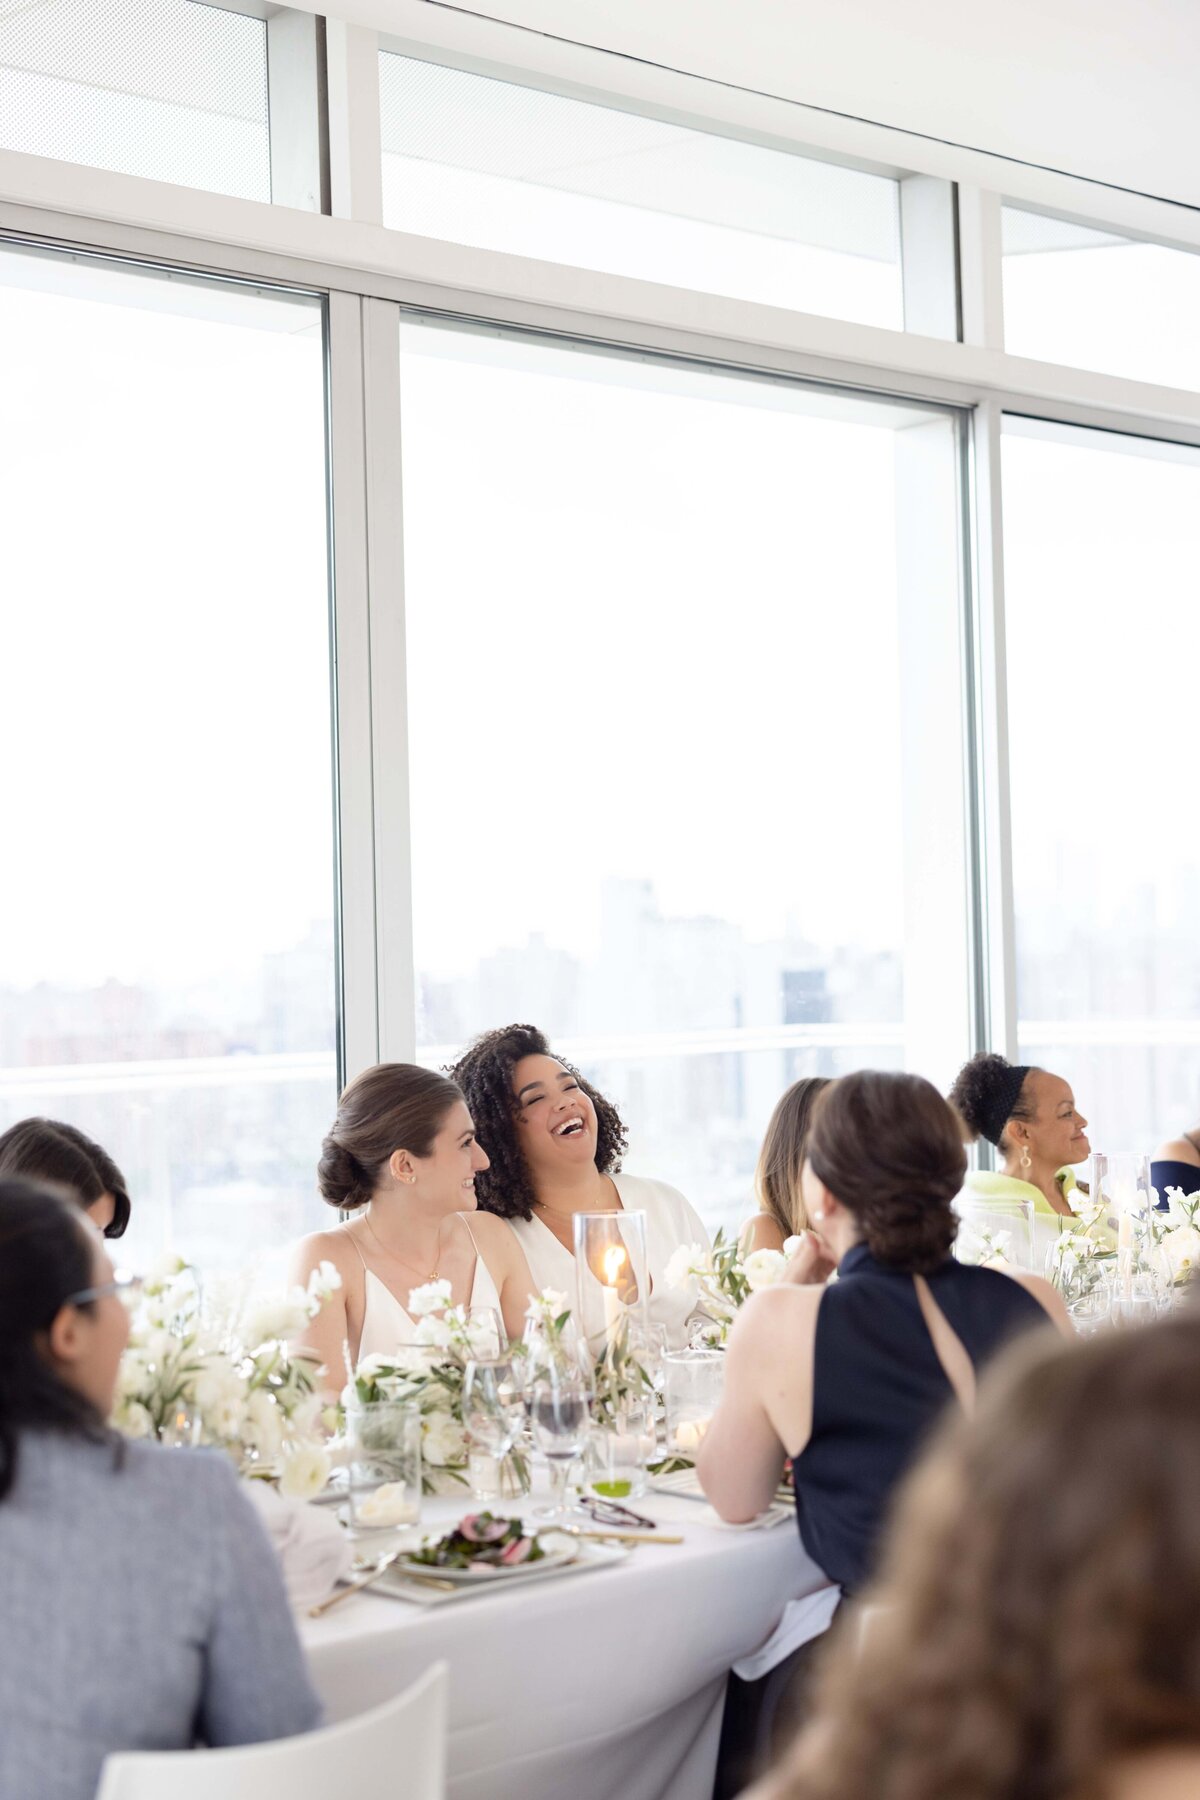 NYC Wedding Reception Brides at Sweetheart Table